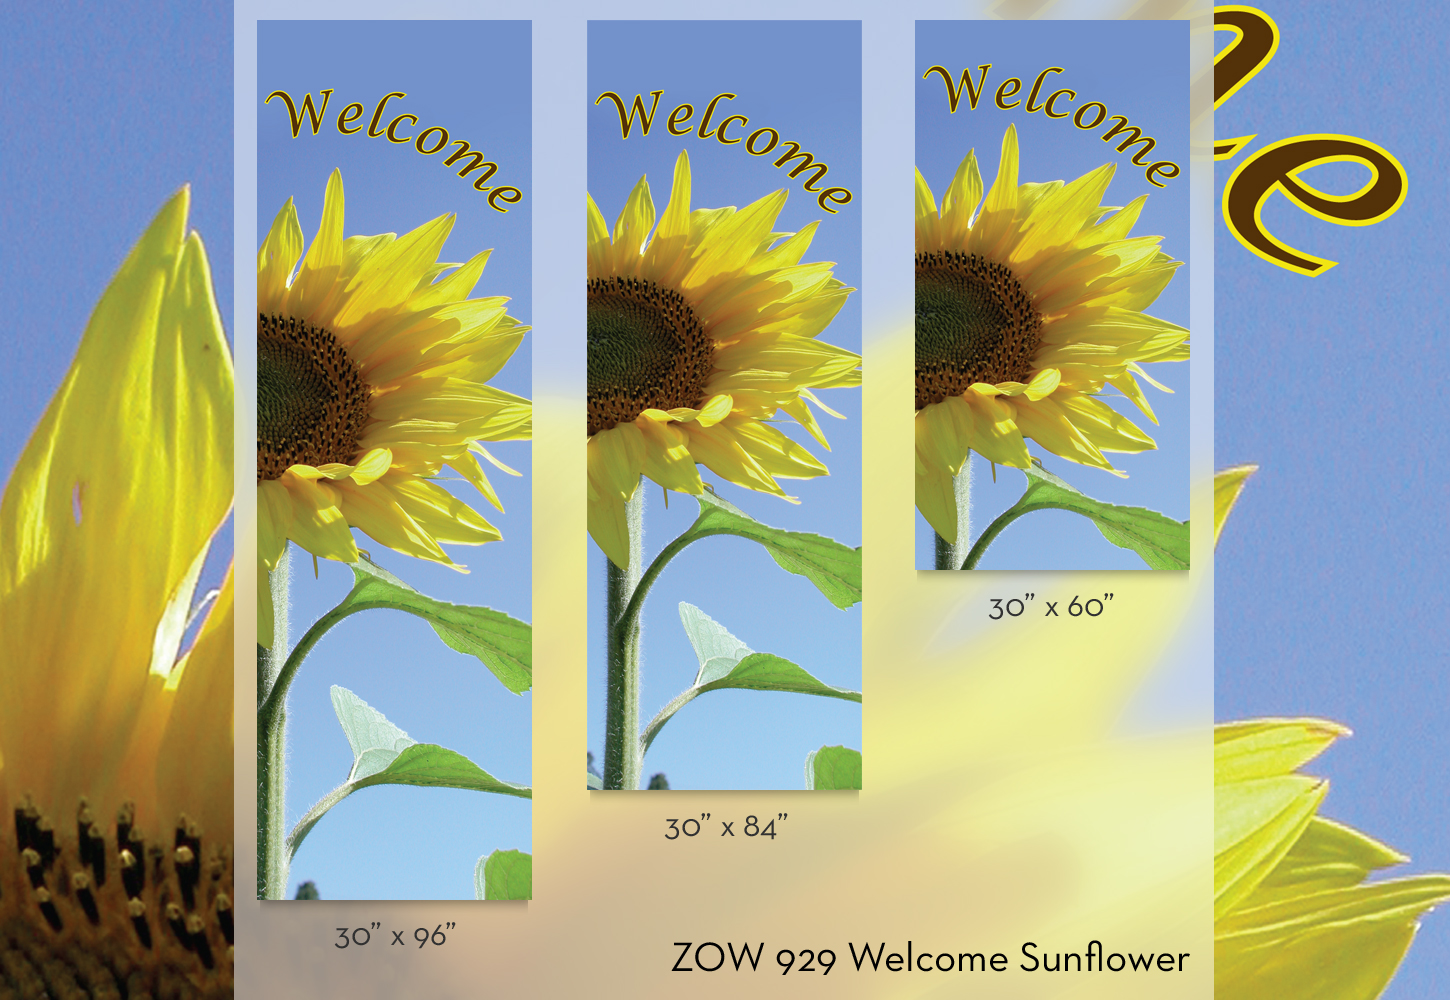 ZOW 929 Welcome Sunflower